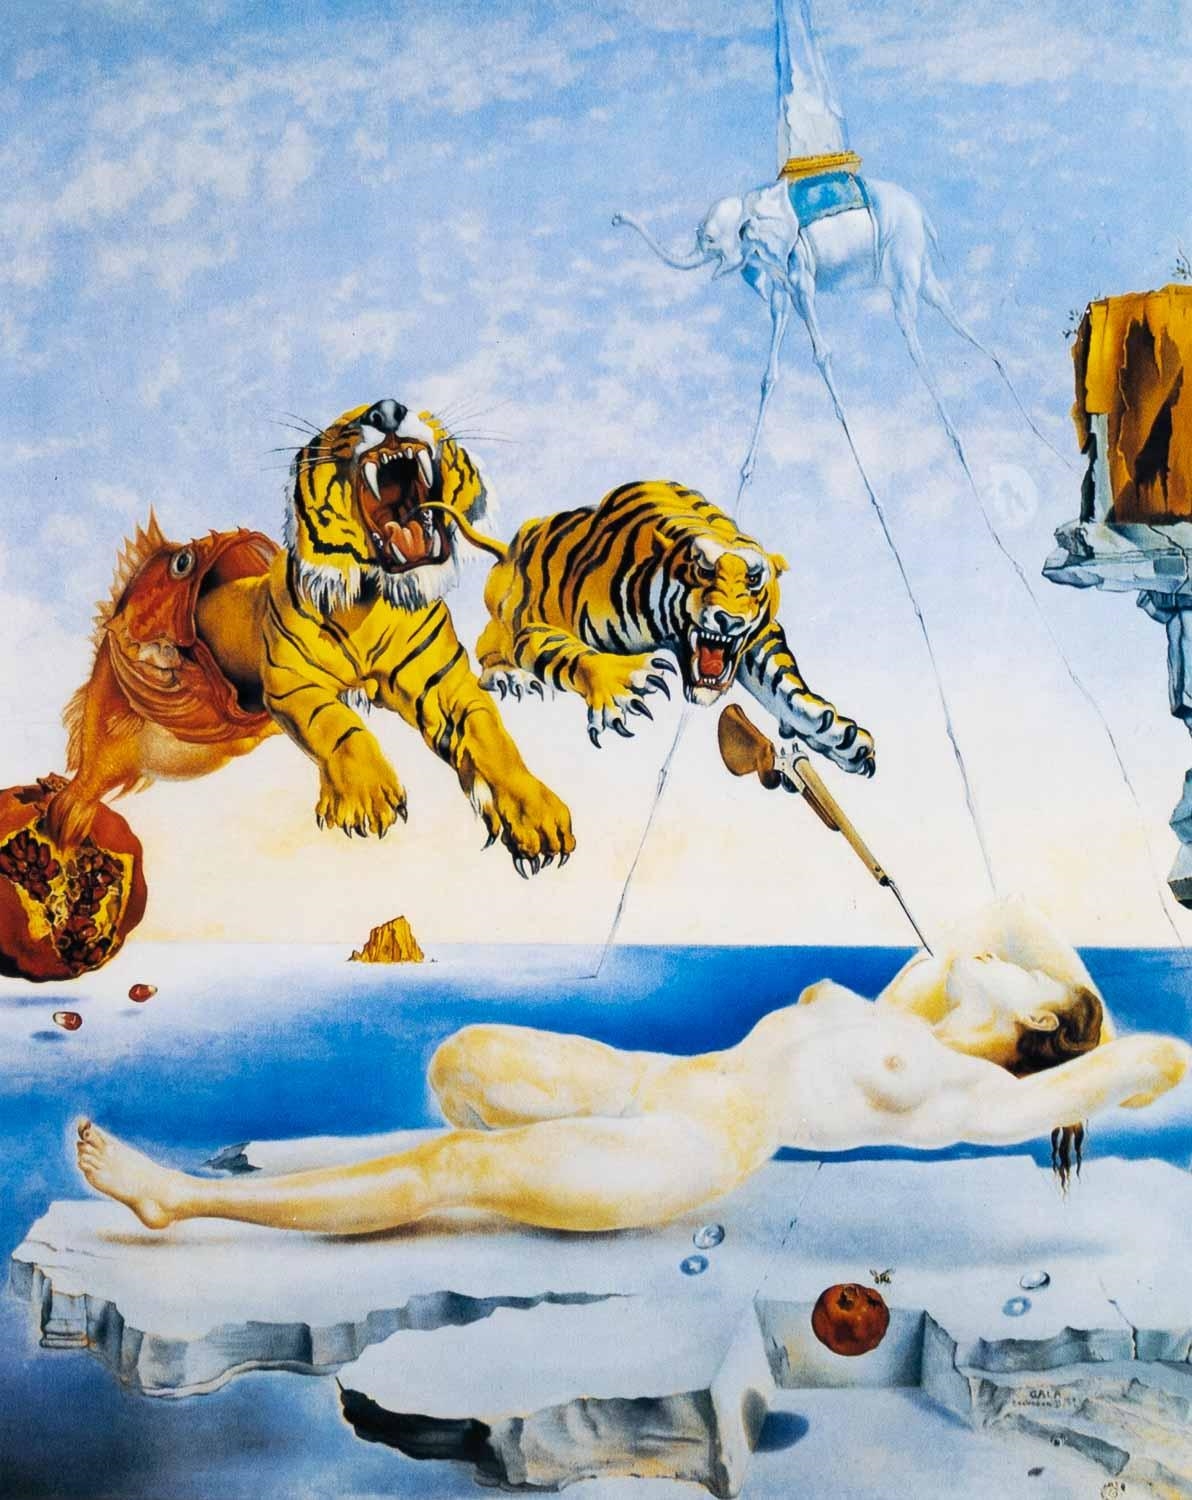 The Awakening by Salvador Dalí